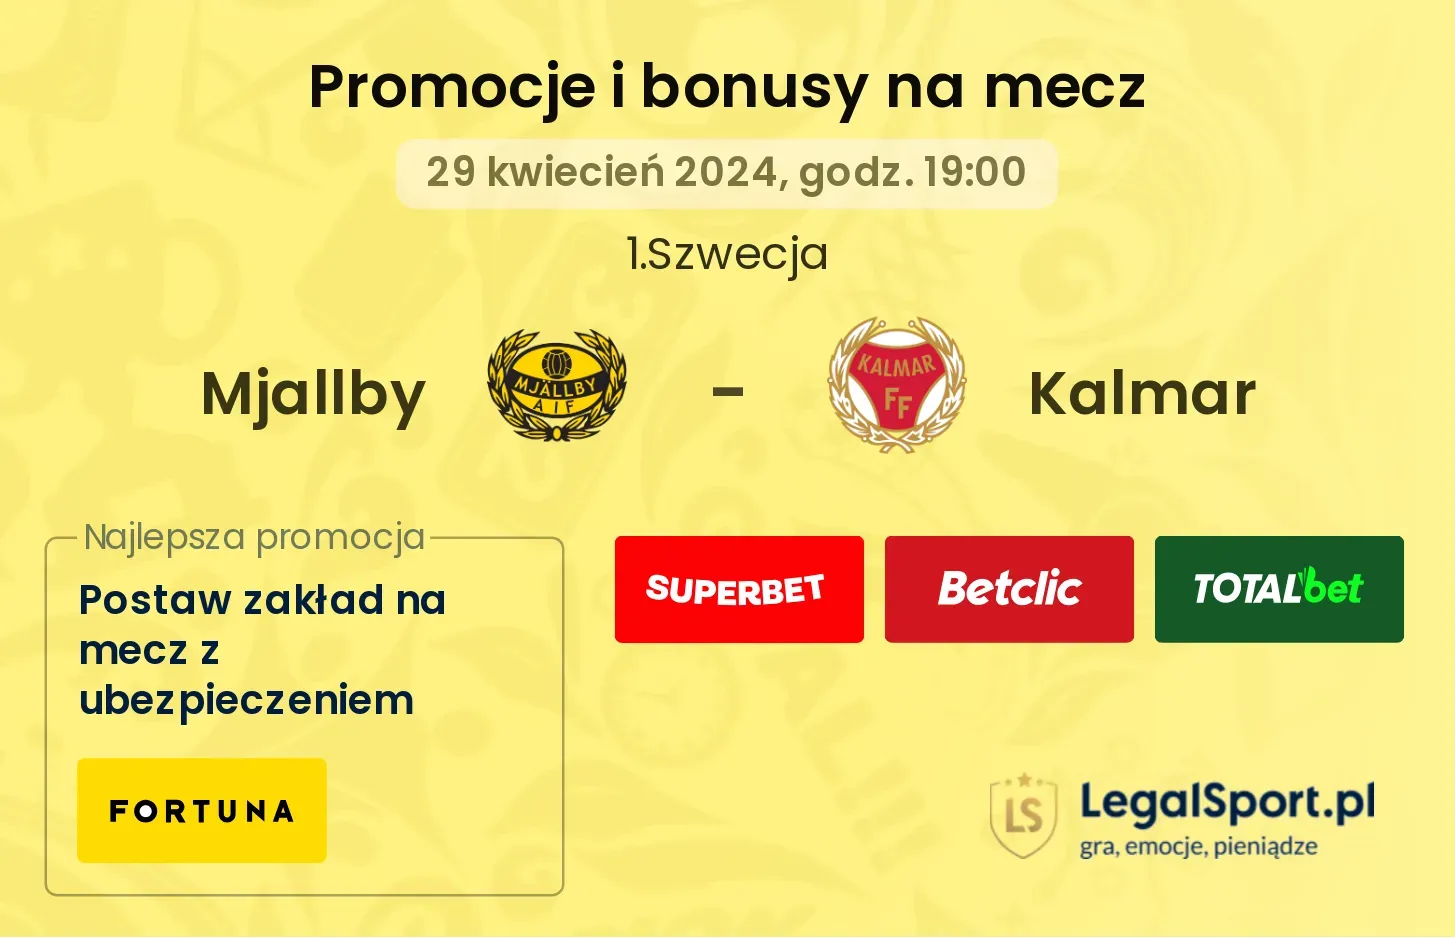 Mjallby - Kalmar promocje bonusy na mecz